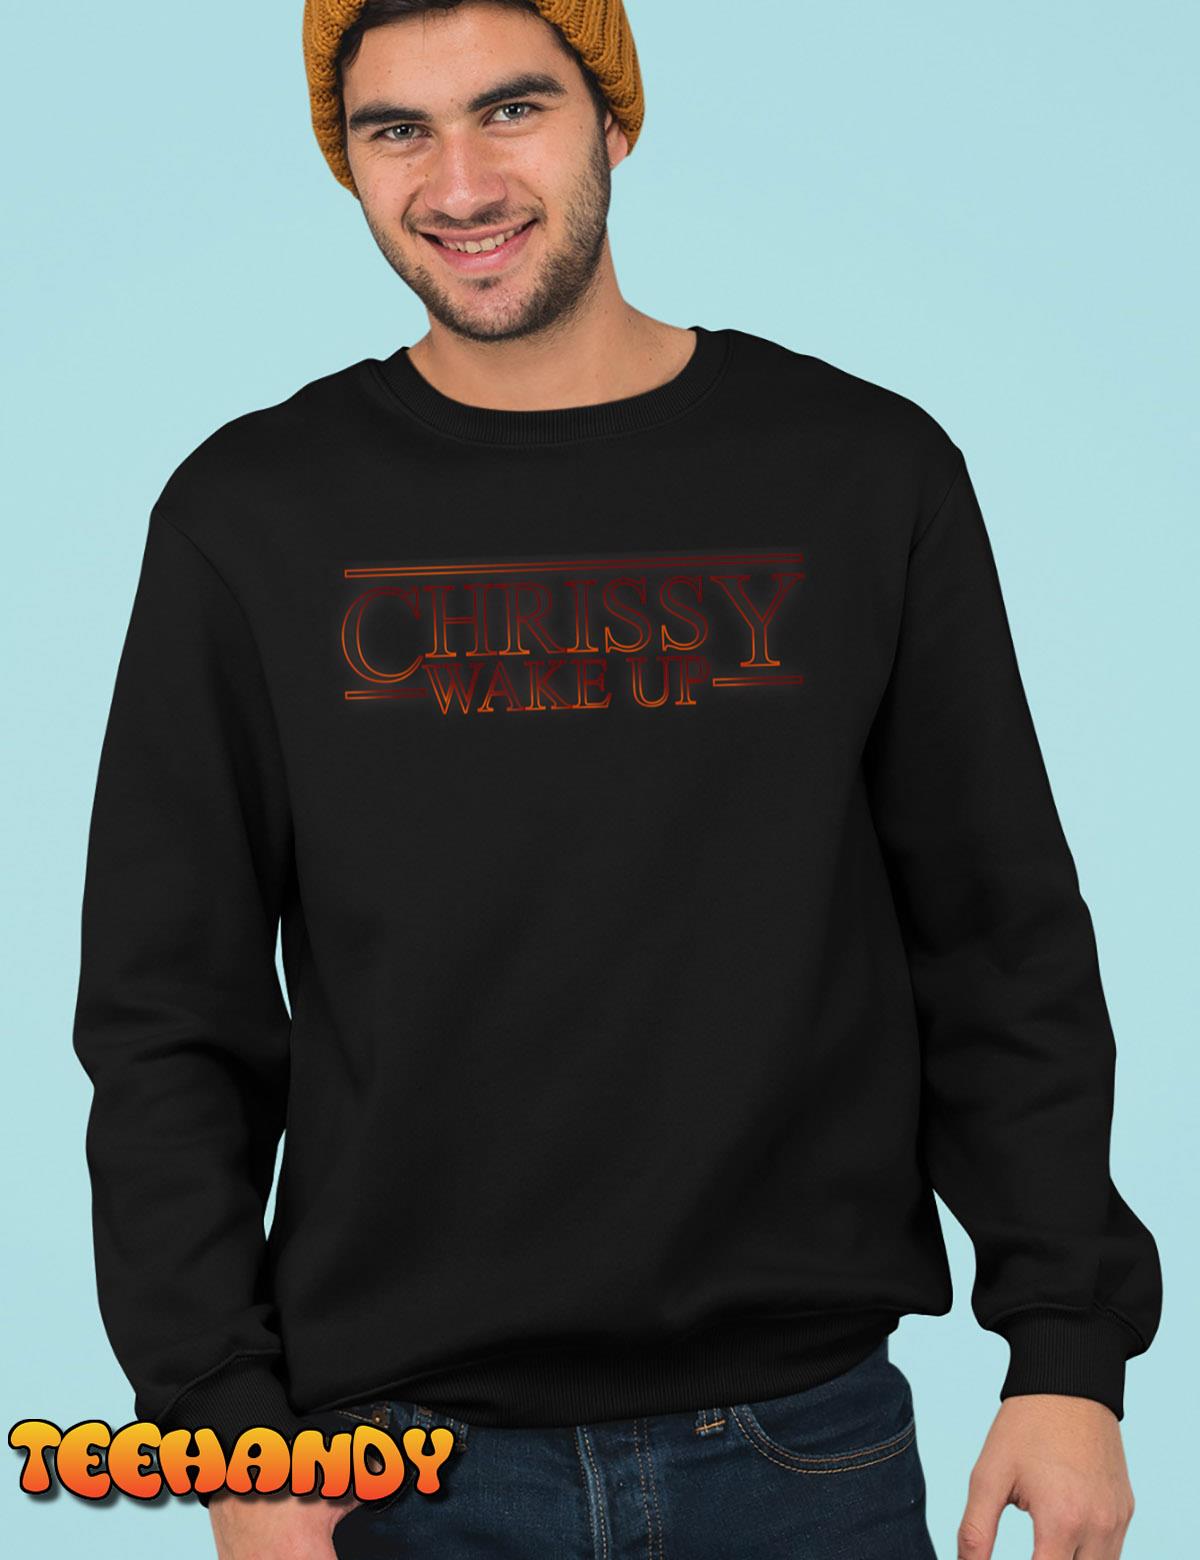 Chrissy Wake Up – Stranger Things T-Shirt